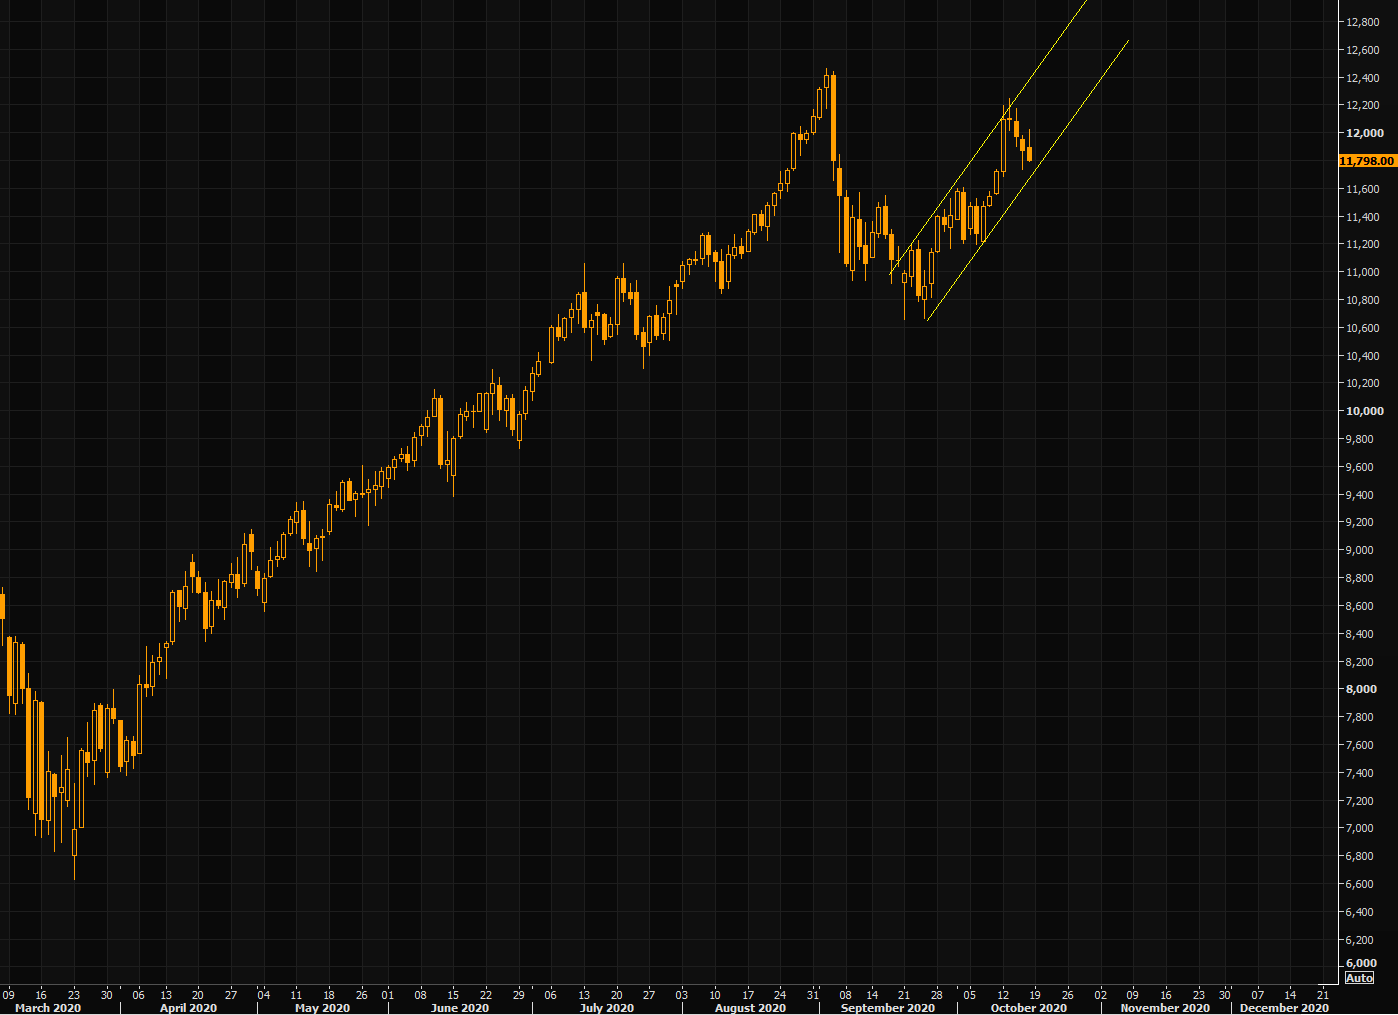 NASDAQ futs - still inside the positive channel since Sep lows...